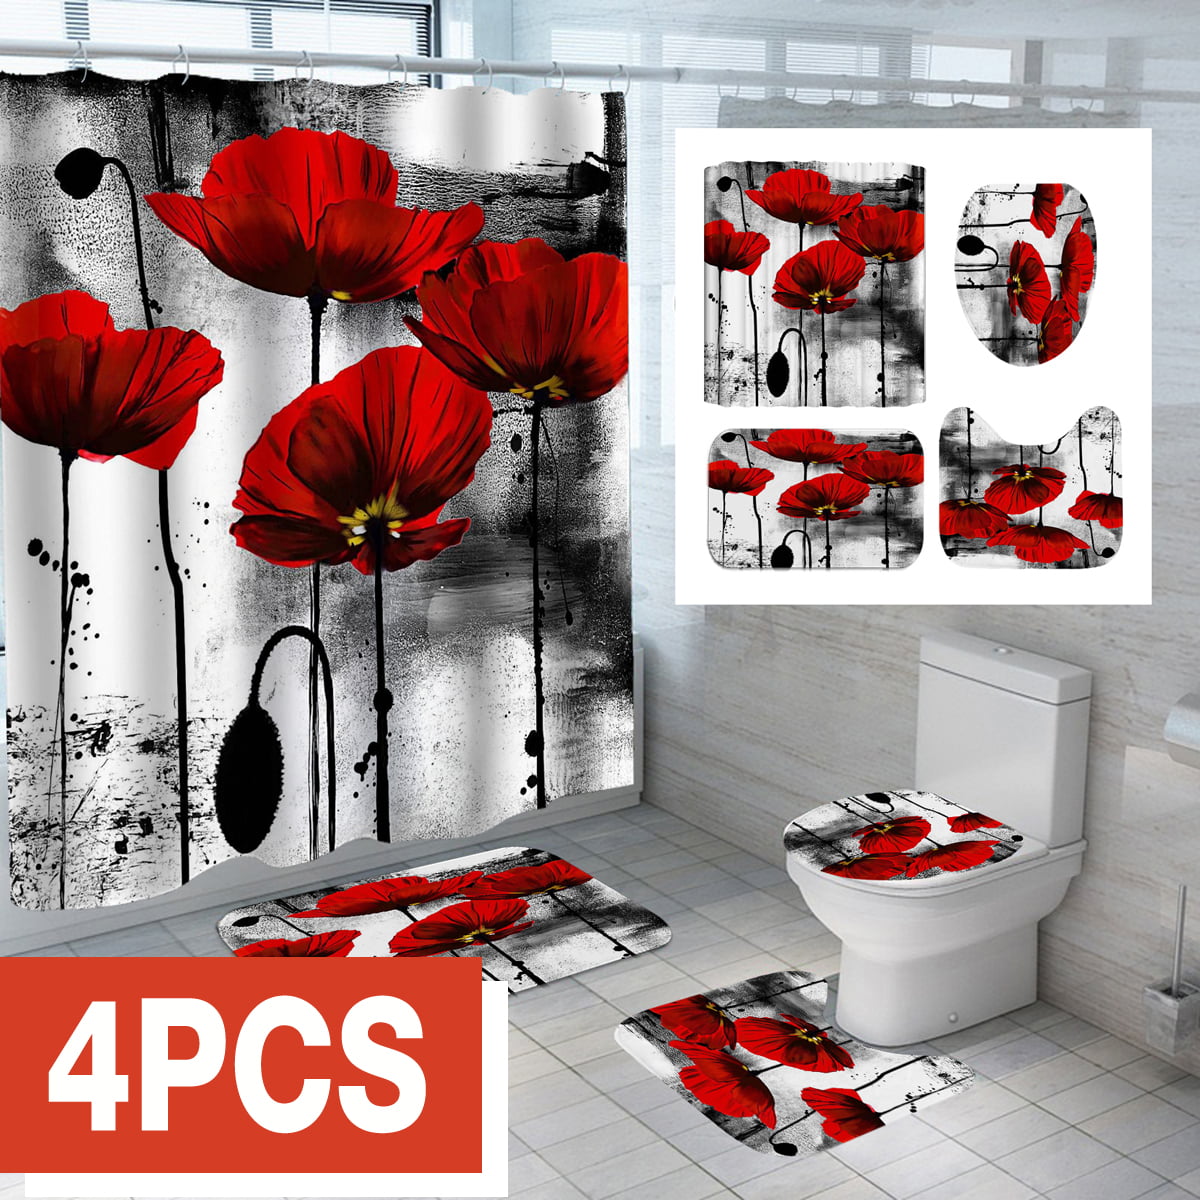 180x180cm Square Shower Curtain Hotel Home Bathroom Decoration 12 Hooks #3 